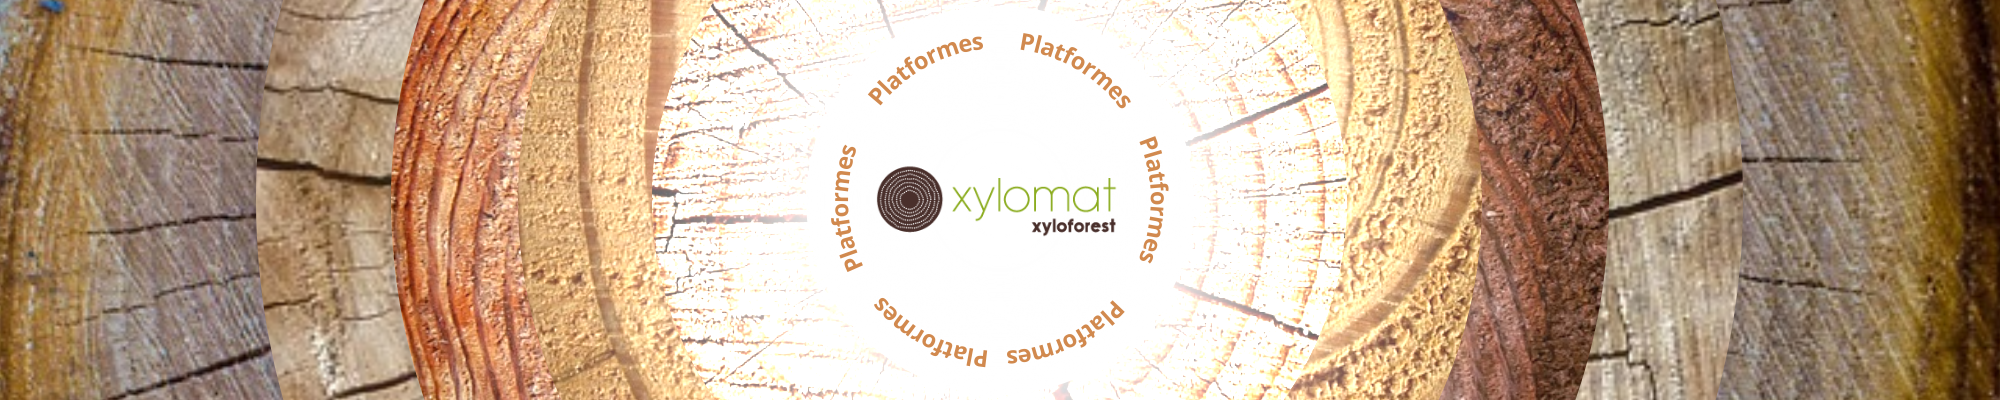 xylomat (2).png